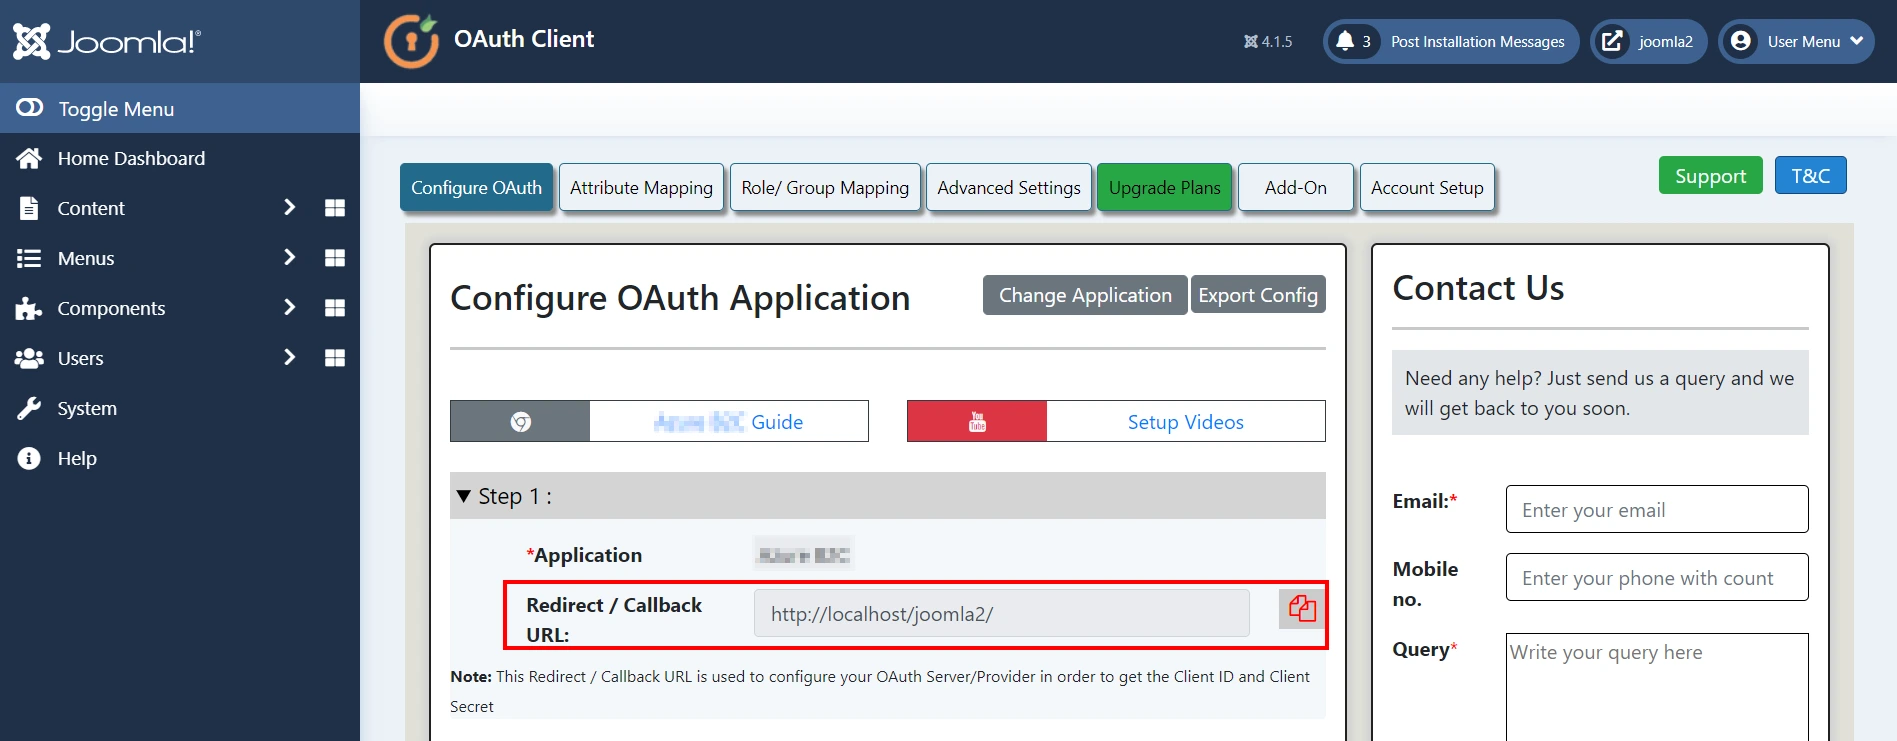 Autodesk Single Sign-On (SSO) OAuth/OpenID